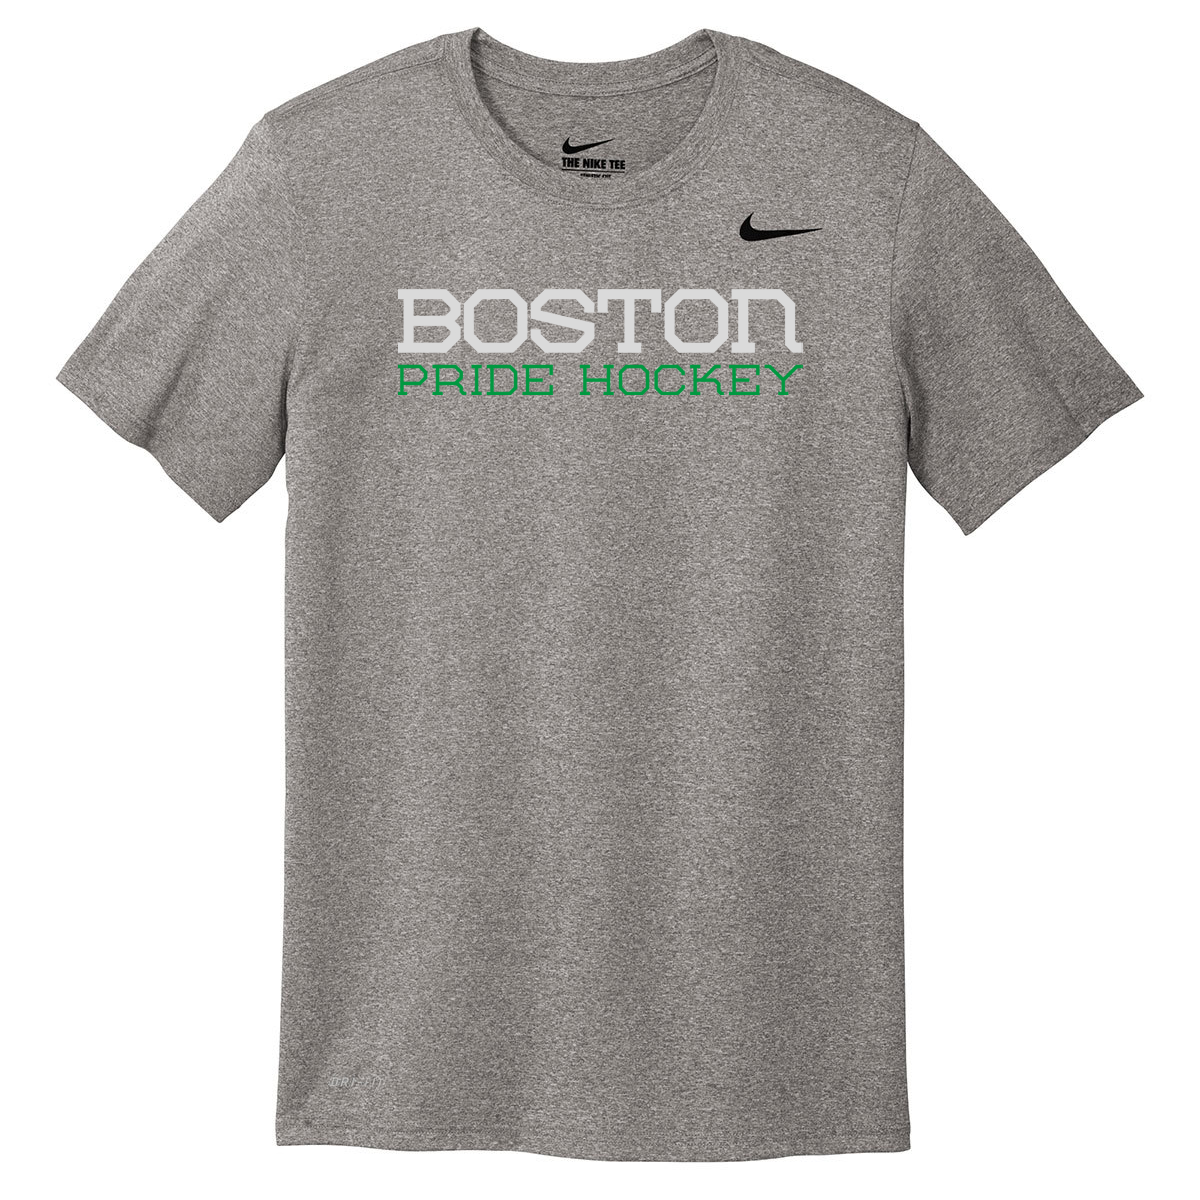 Boston Pride Hockey Nike Legend Tee